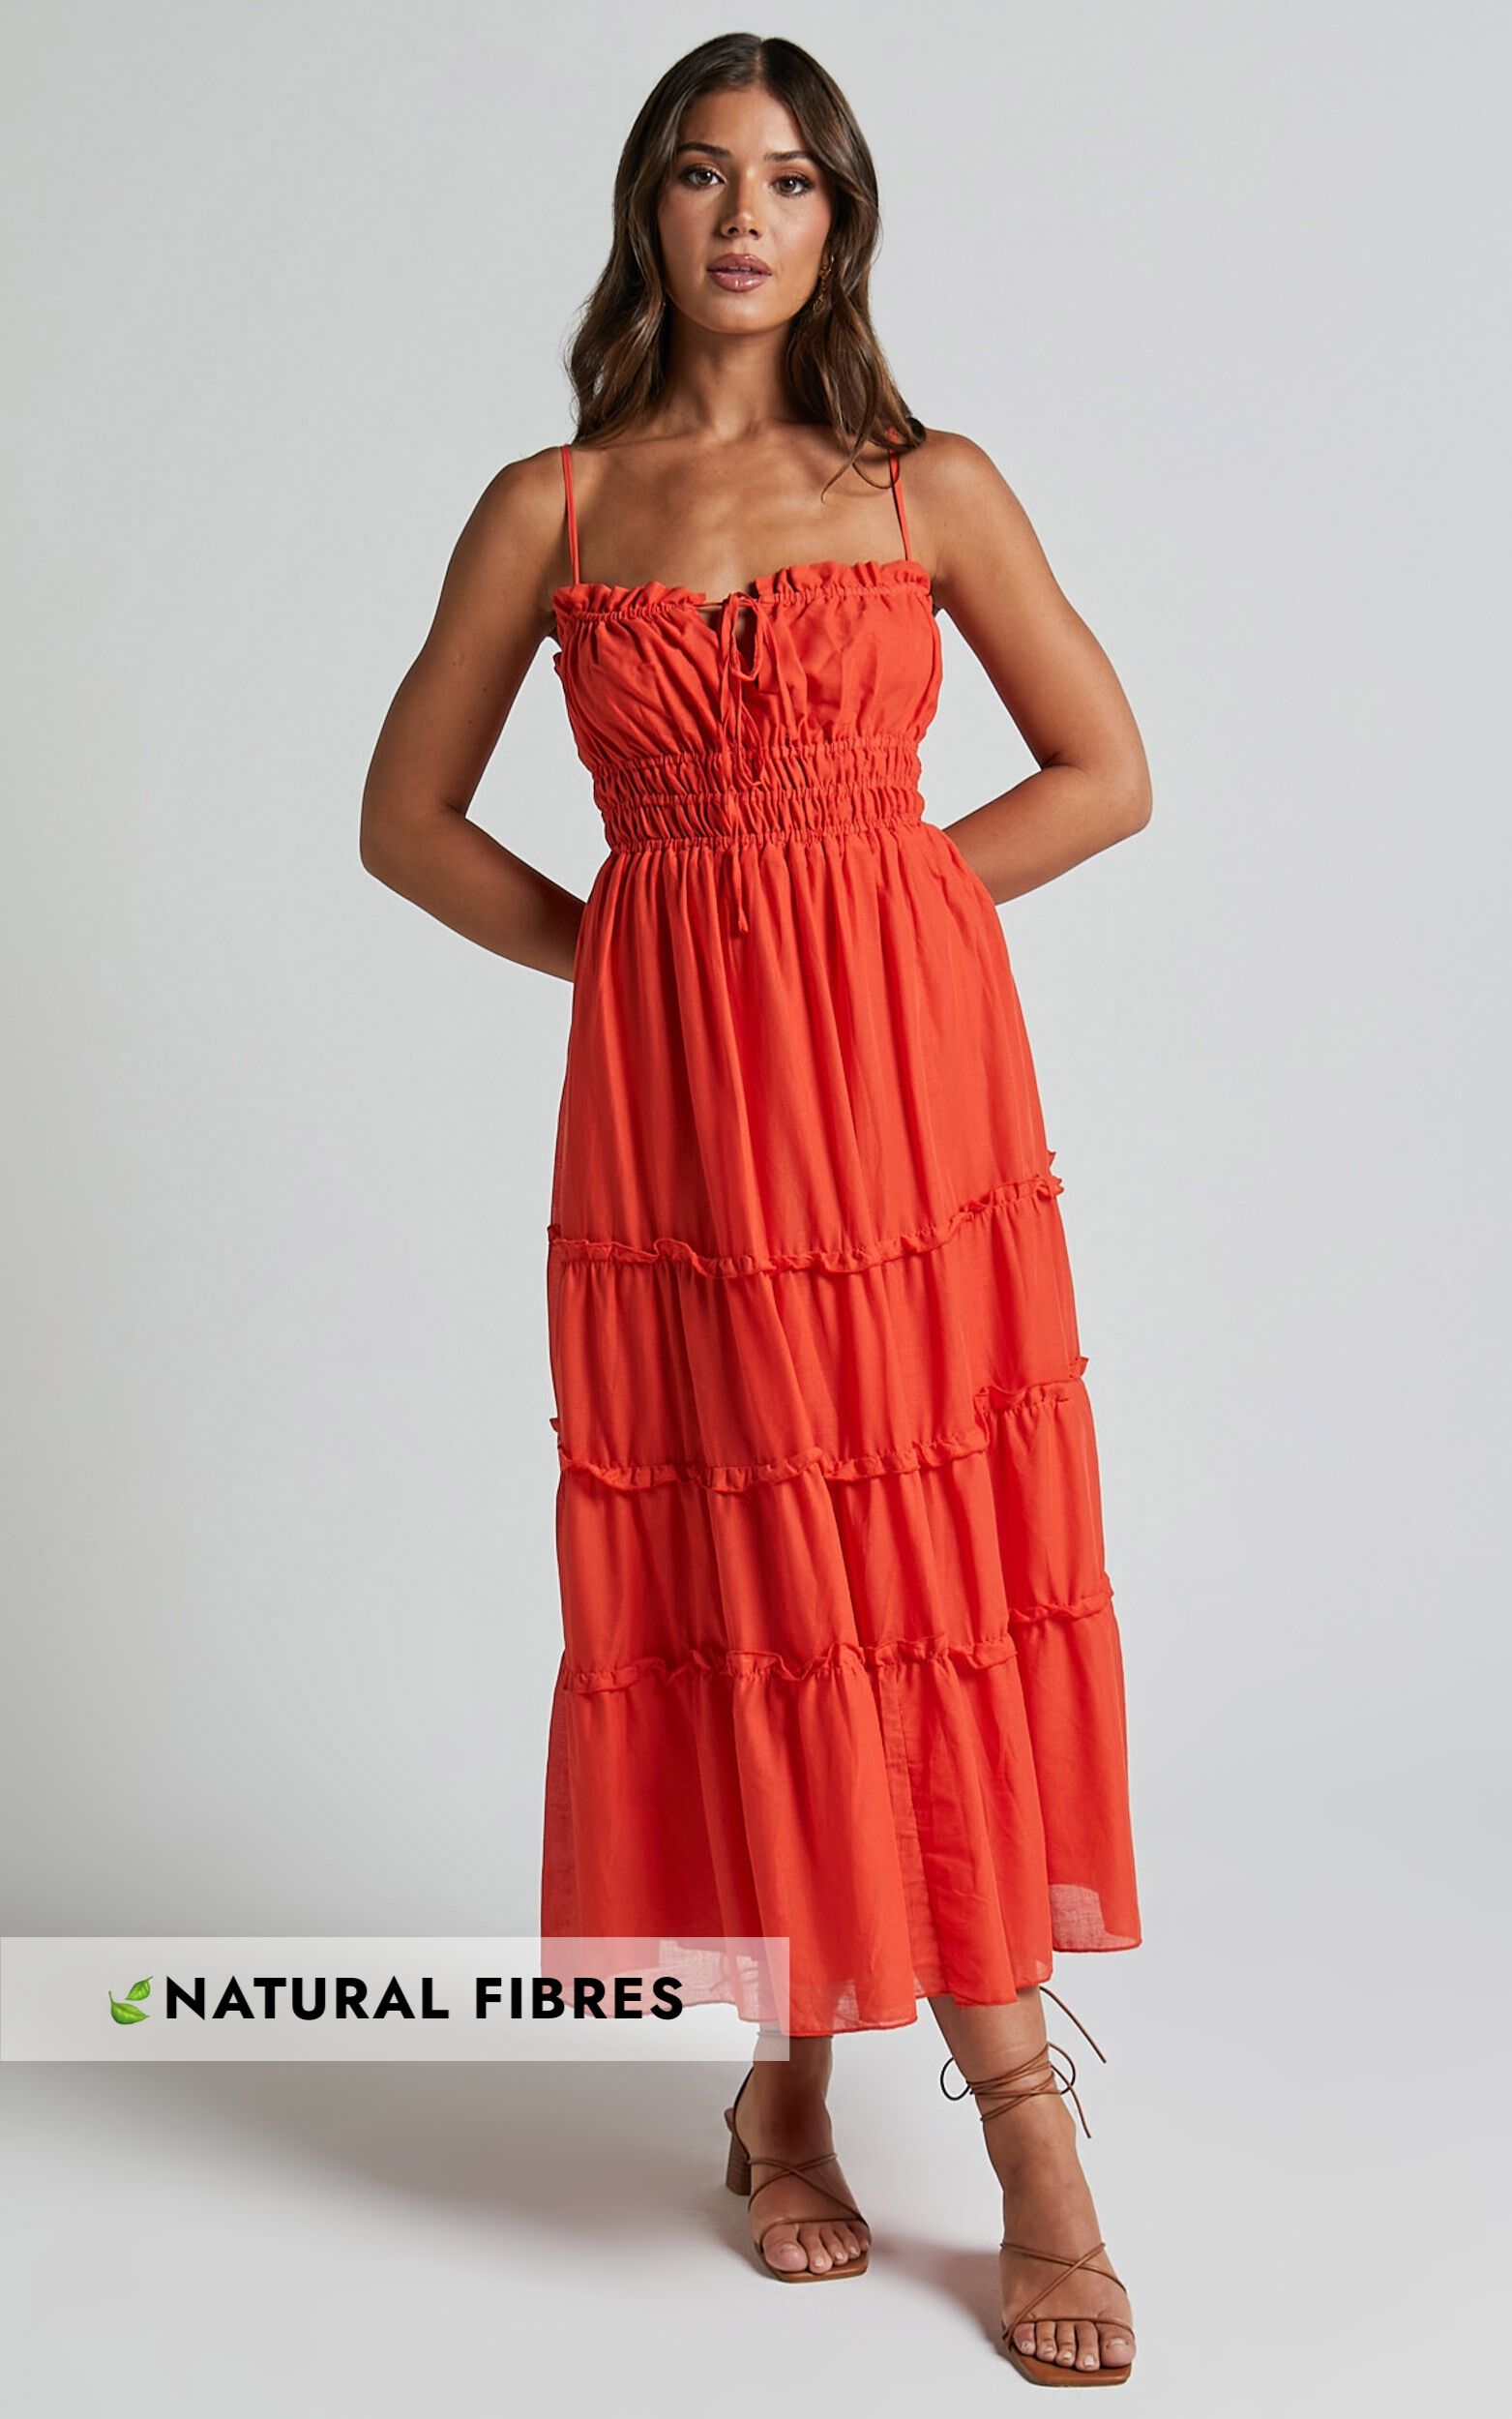 Schiffer Midi Dress - Strappy Ruched Tie Front Tiered Dress in Red Orange - 04, ORG2